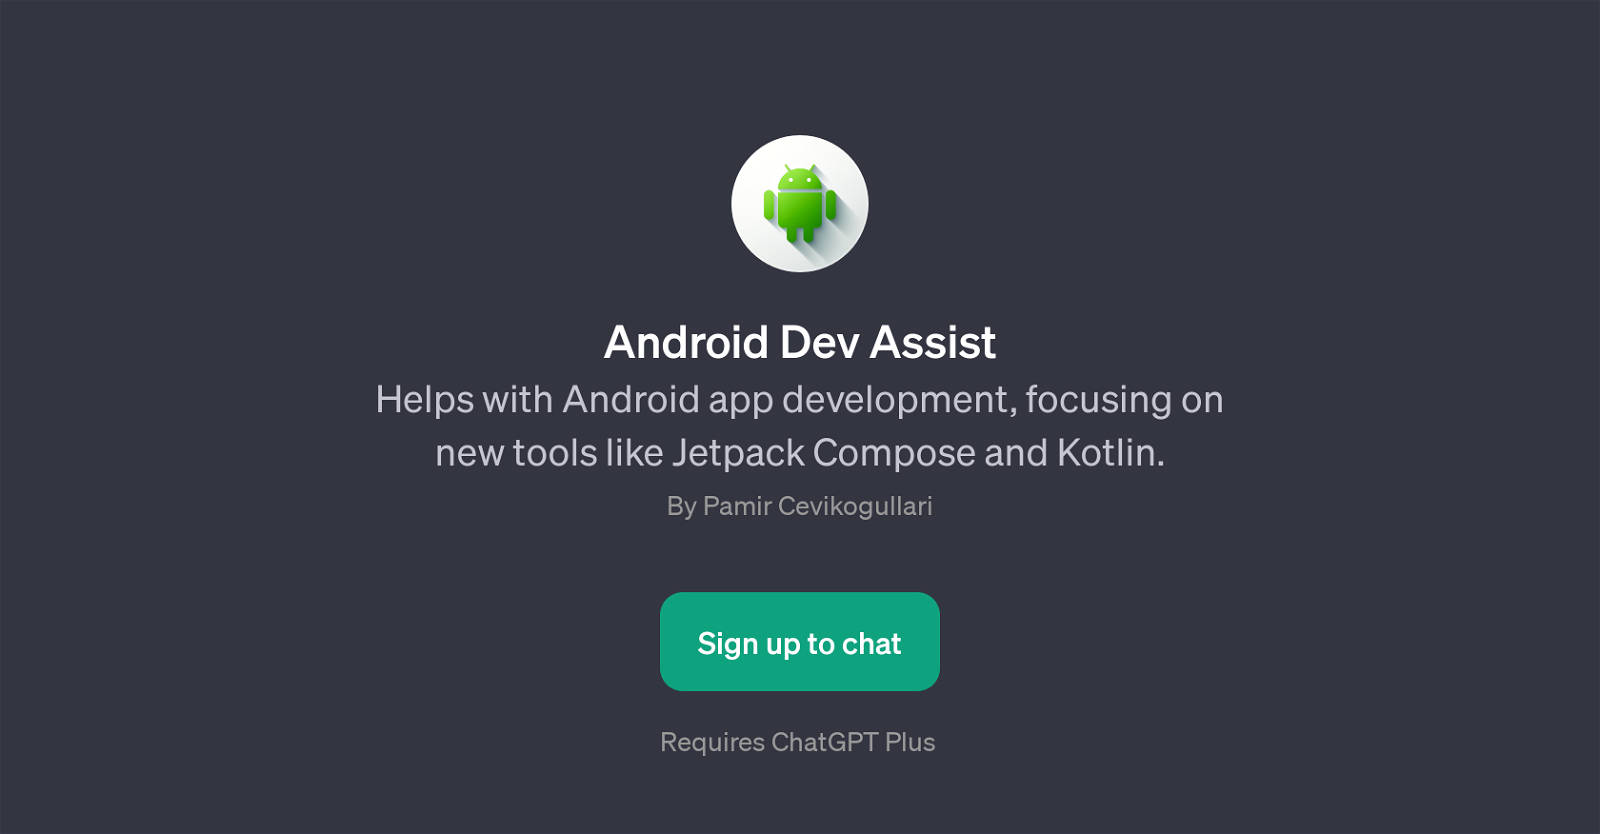 Android Dev Assist website